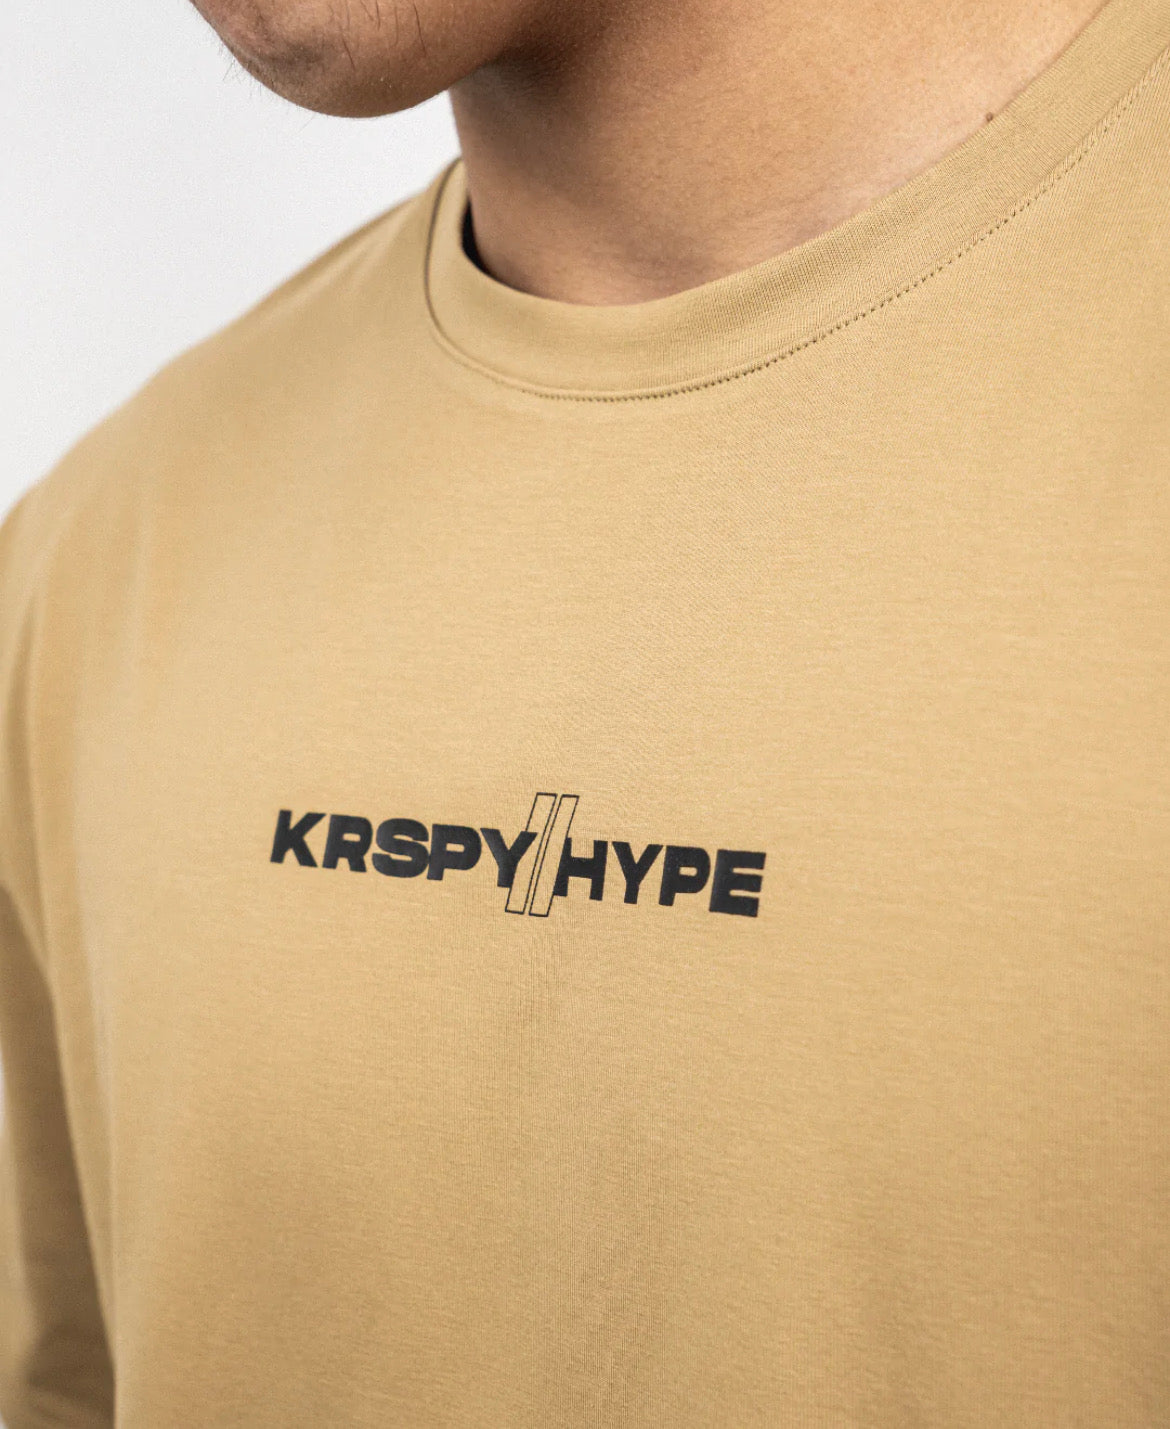 KRSPY//HYPE Collab Tee - Brown - The Hype Kelowna